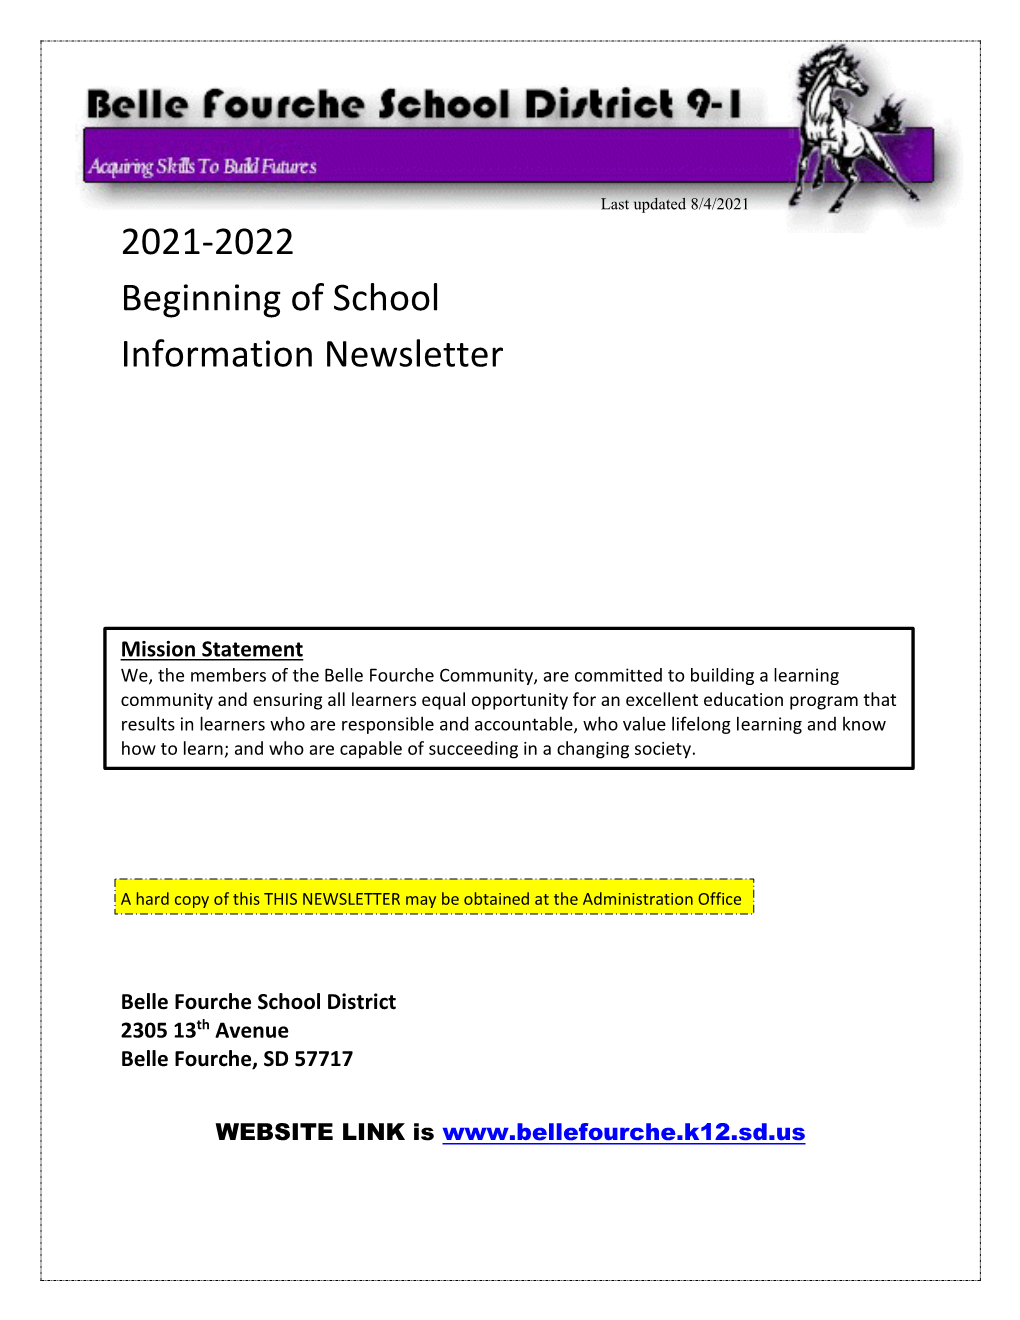 2021-2022 Beginning of School Information Newsletter